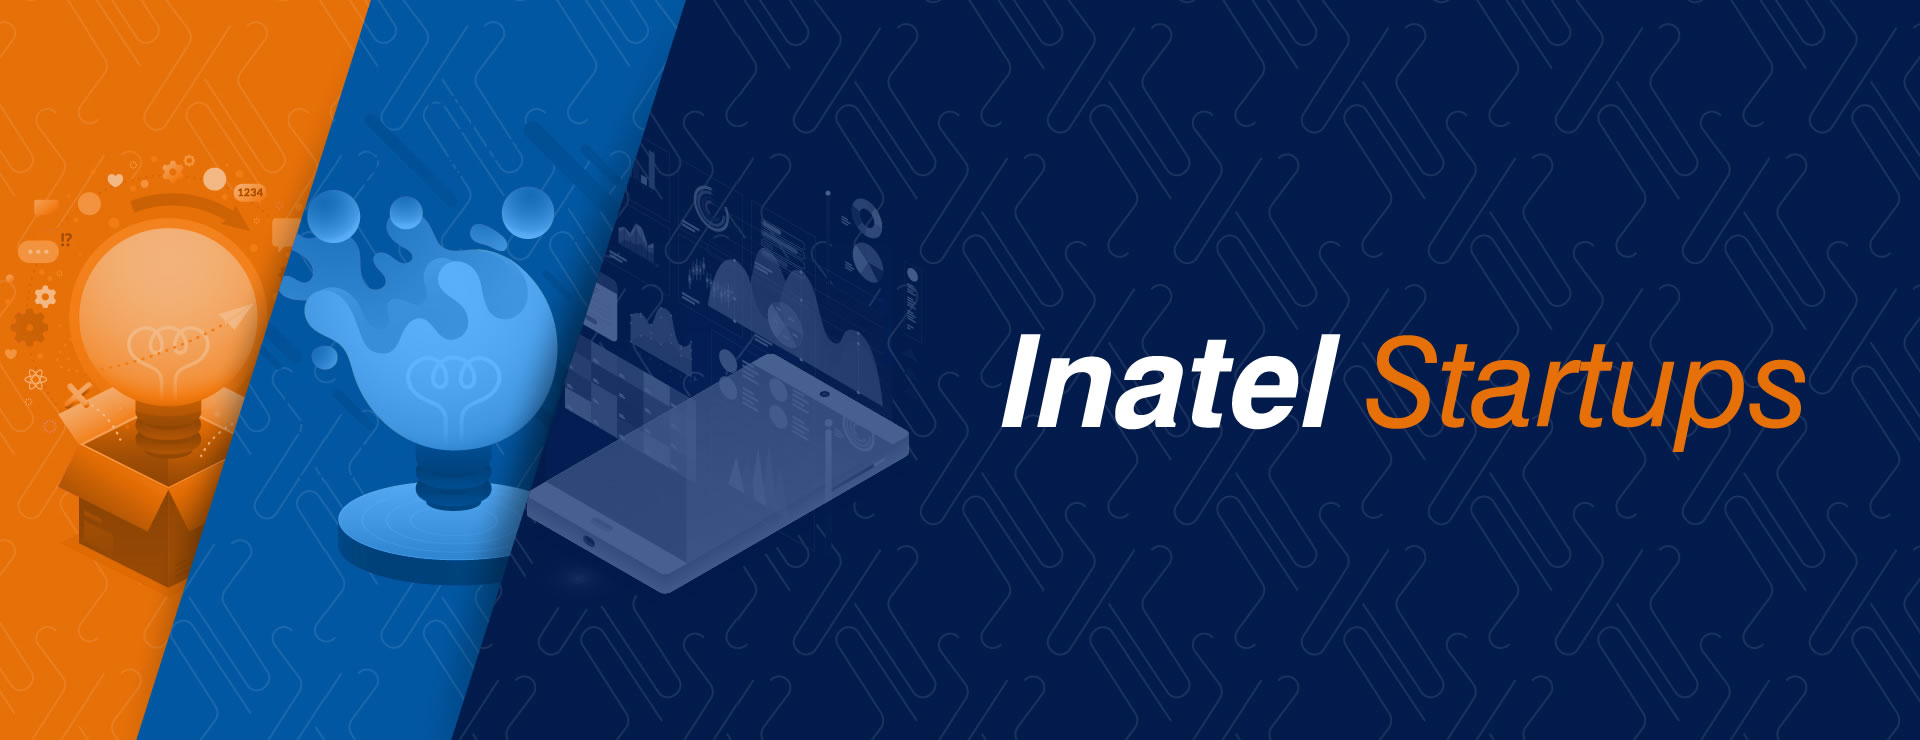 Inatel Startups